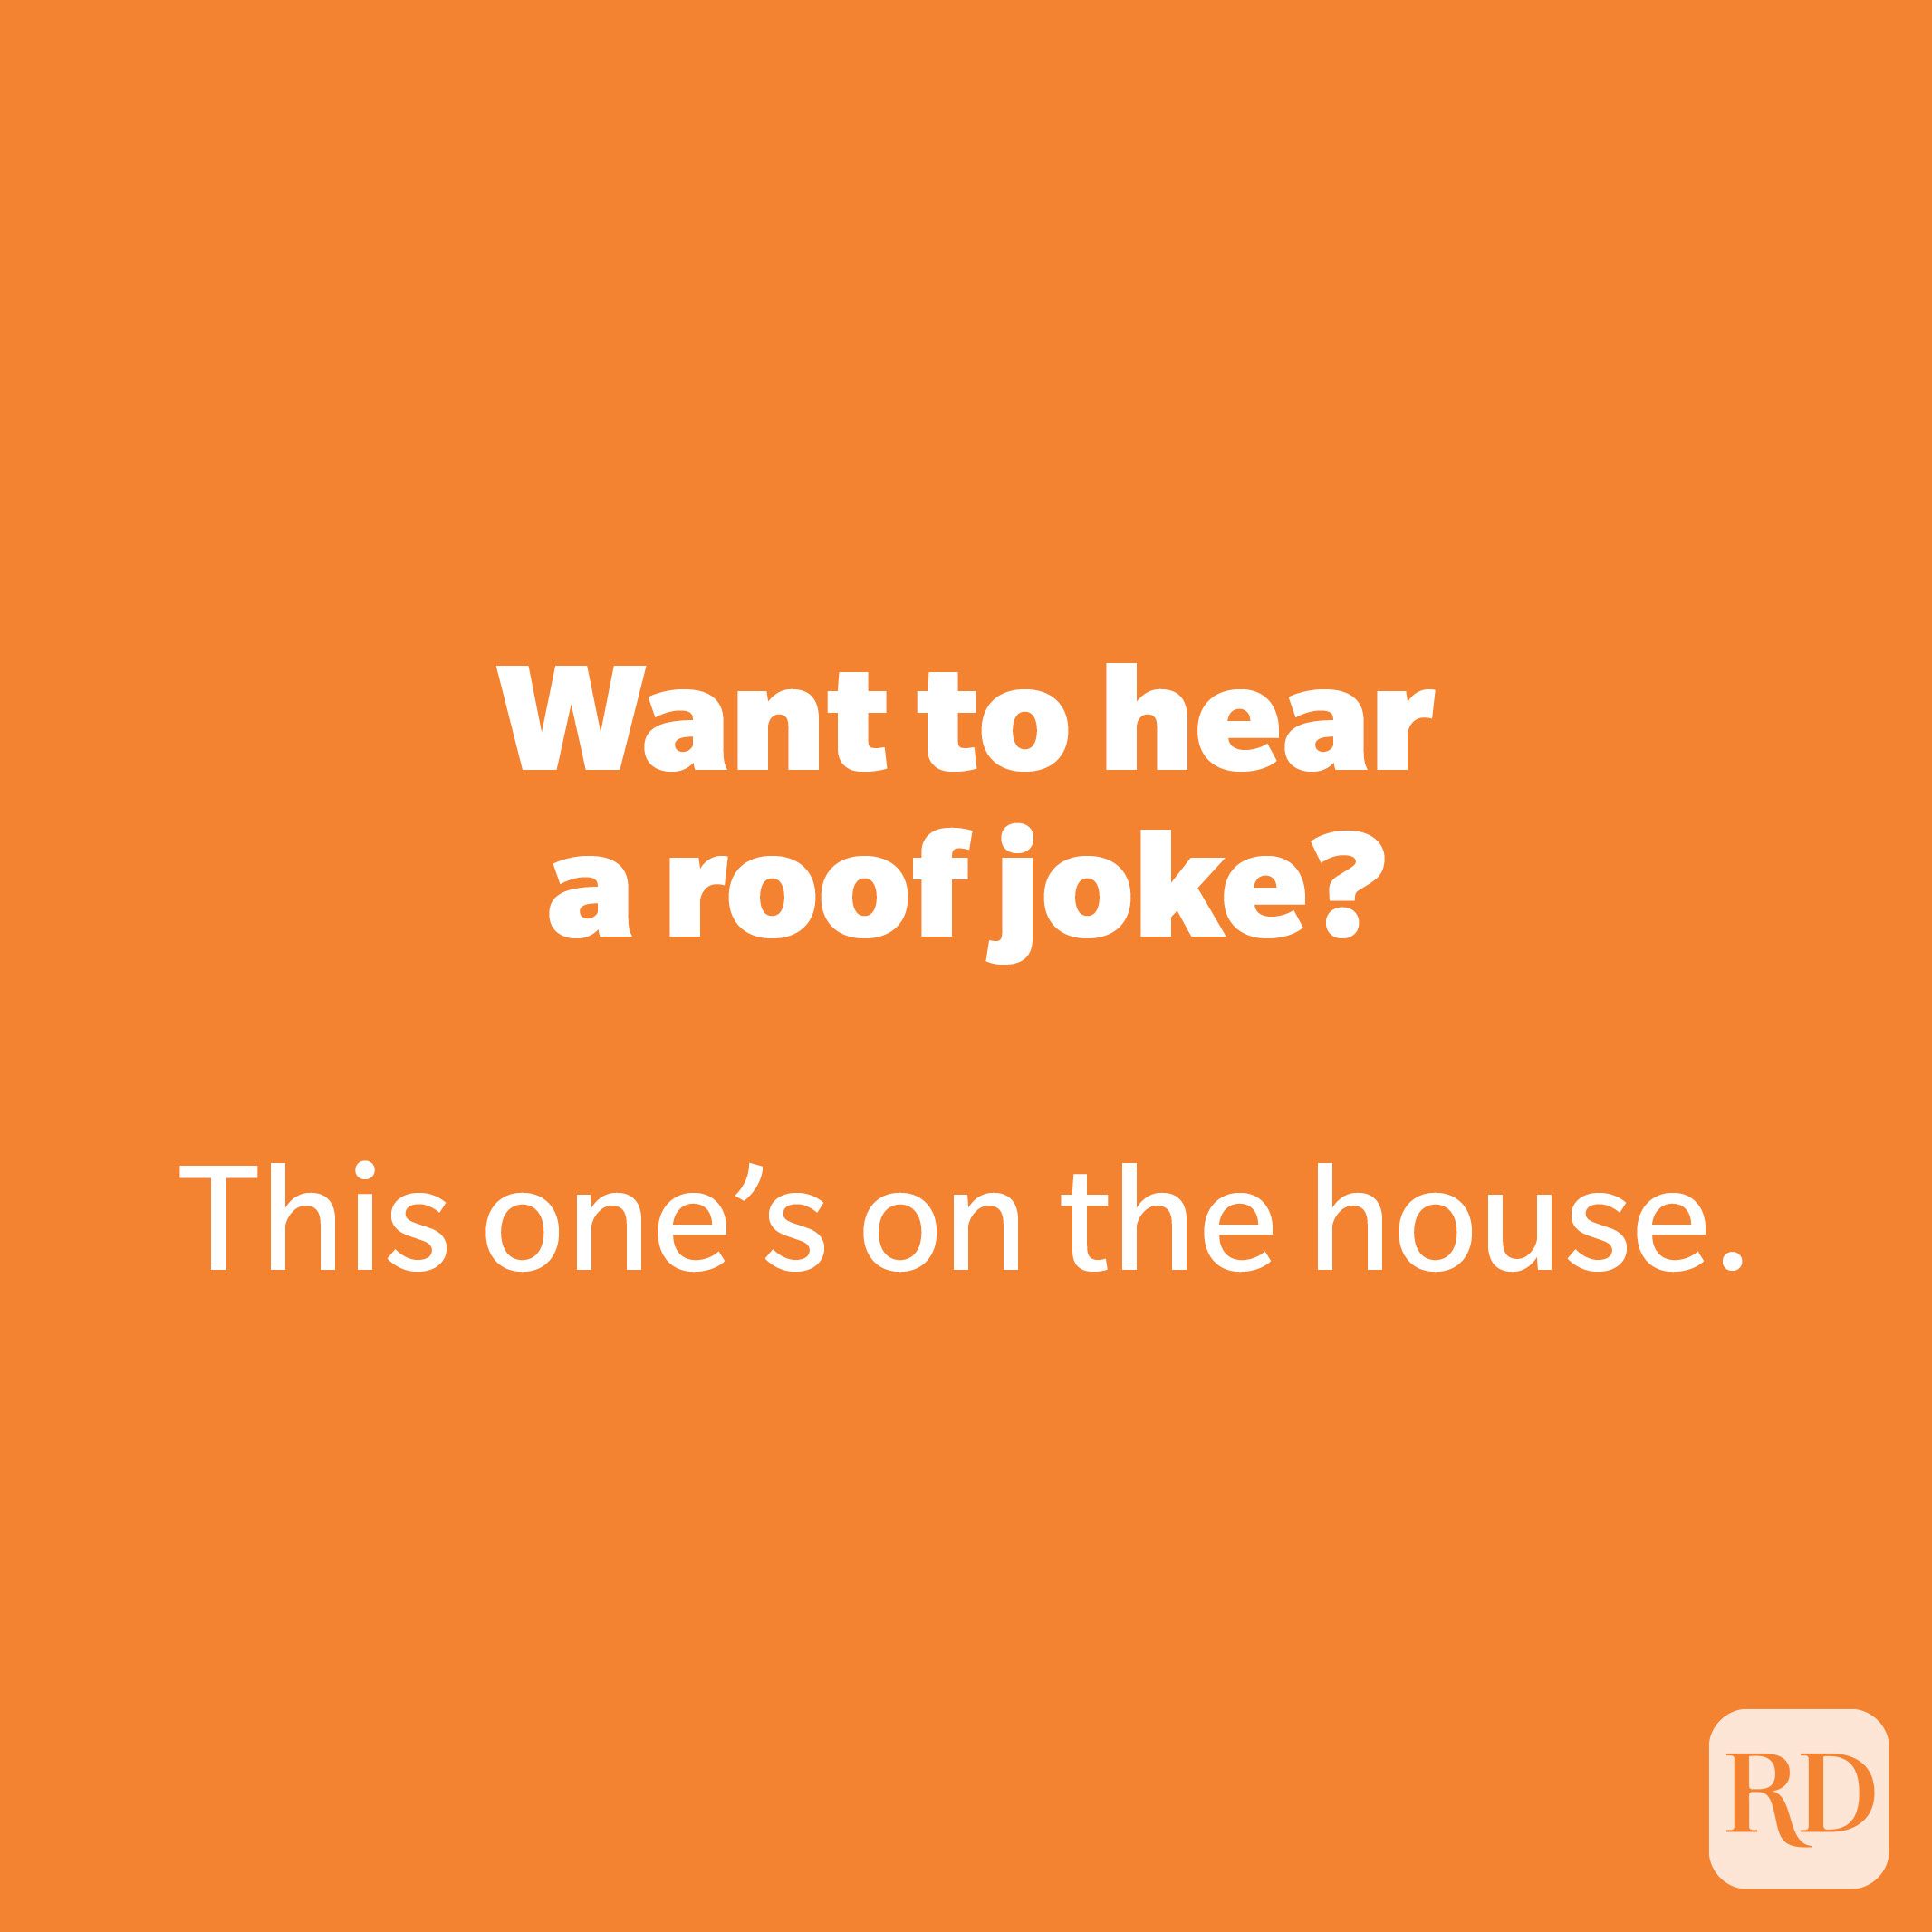 Want to hear a roof joke?